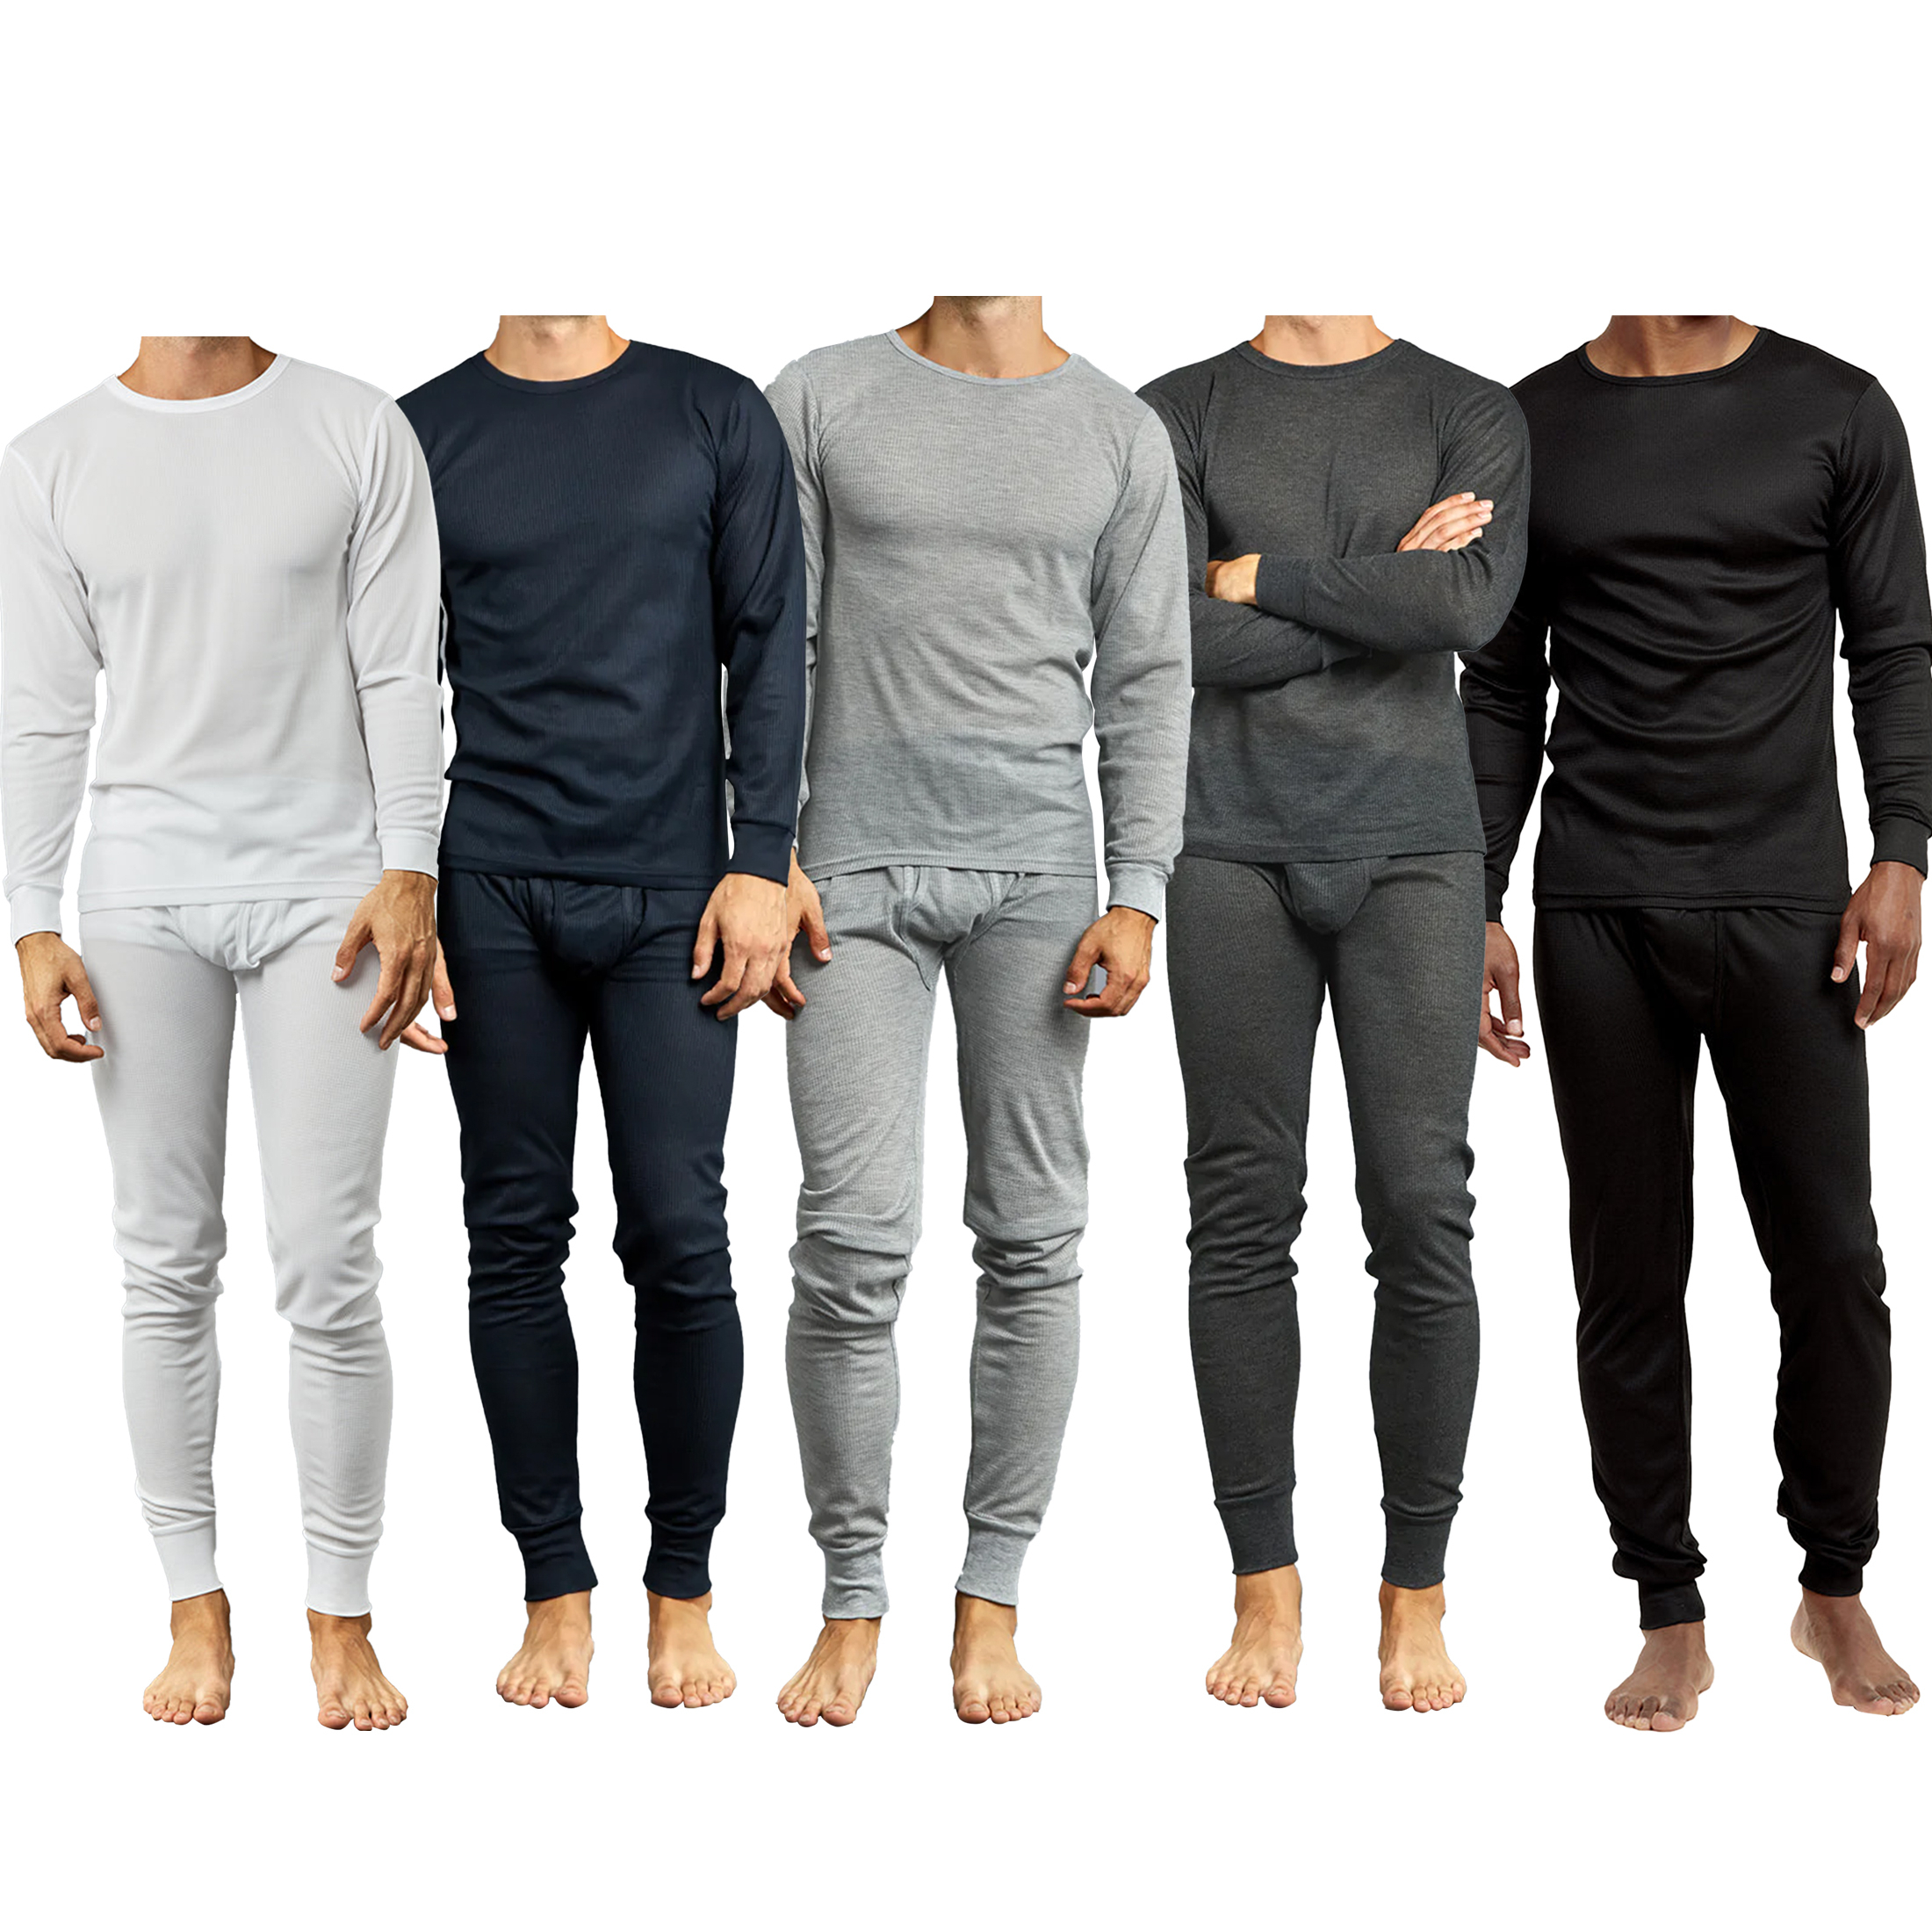 2-Piece: Men's Moisture Wicking Long Johns Base Layer Thermal Underwear Set (Top & Bottom) - Grey, Medium